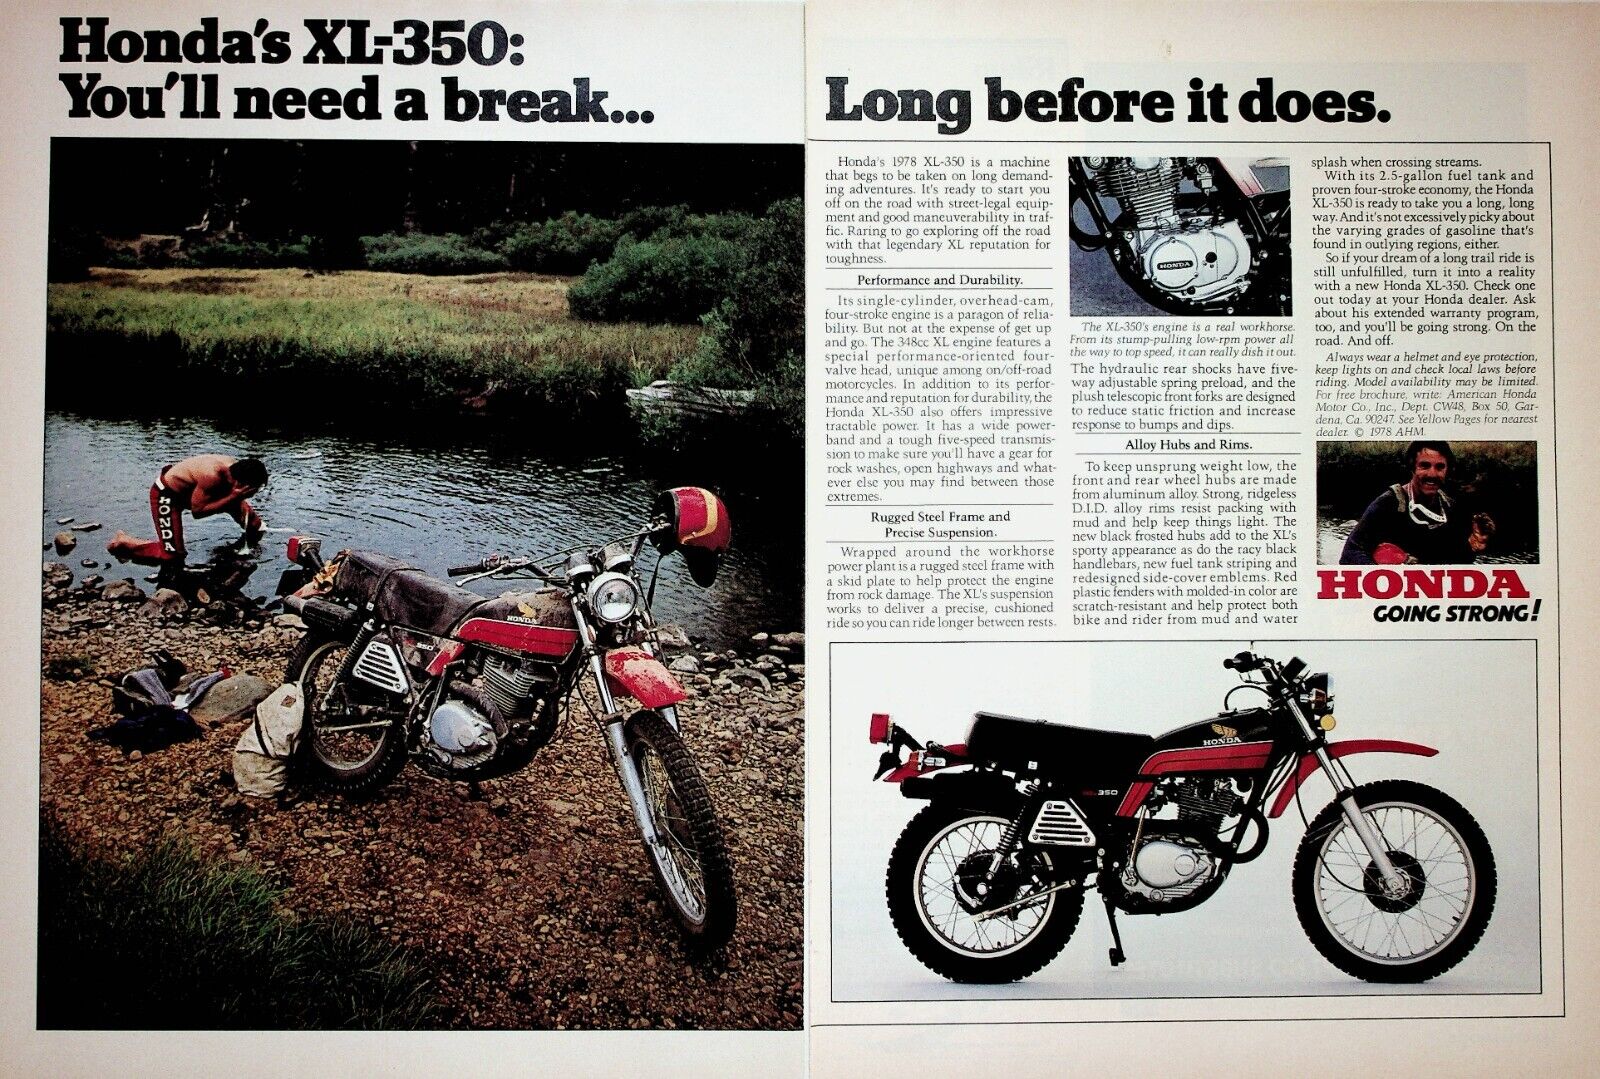 1978 Honda XL350 - 2-Page Vintage Motorcycle Ad